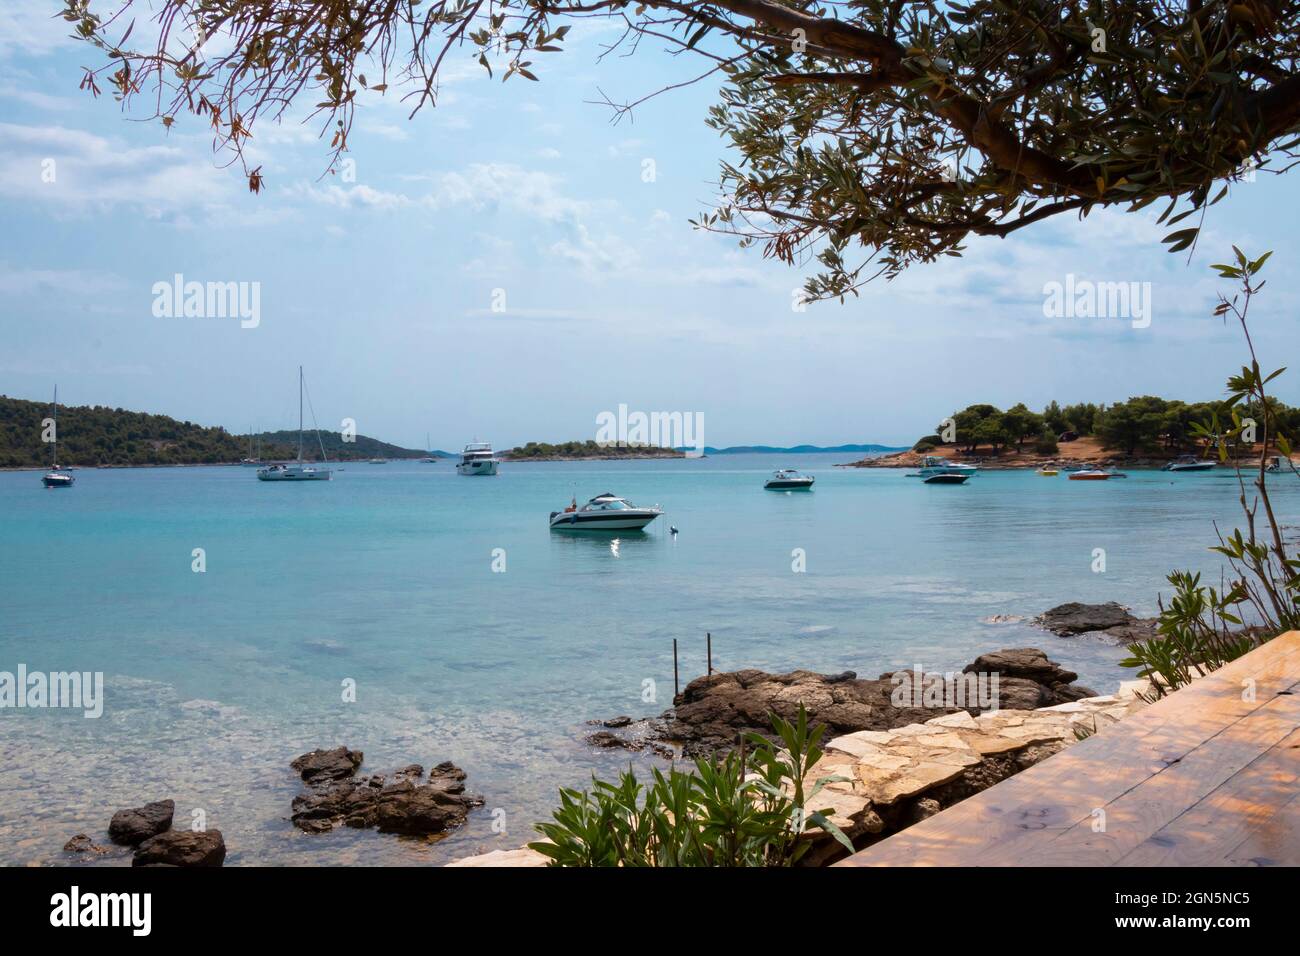 Kosirina, Murter, Croatia - August 24, 2021: Boats moored in a calm bay, view from the beach bar through vegetation Stock Photo